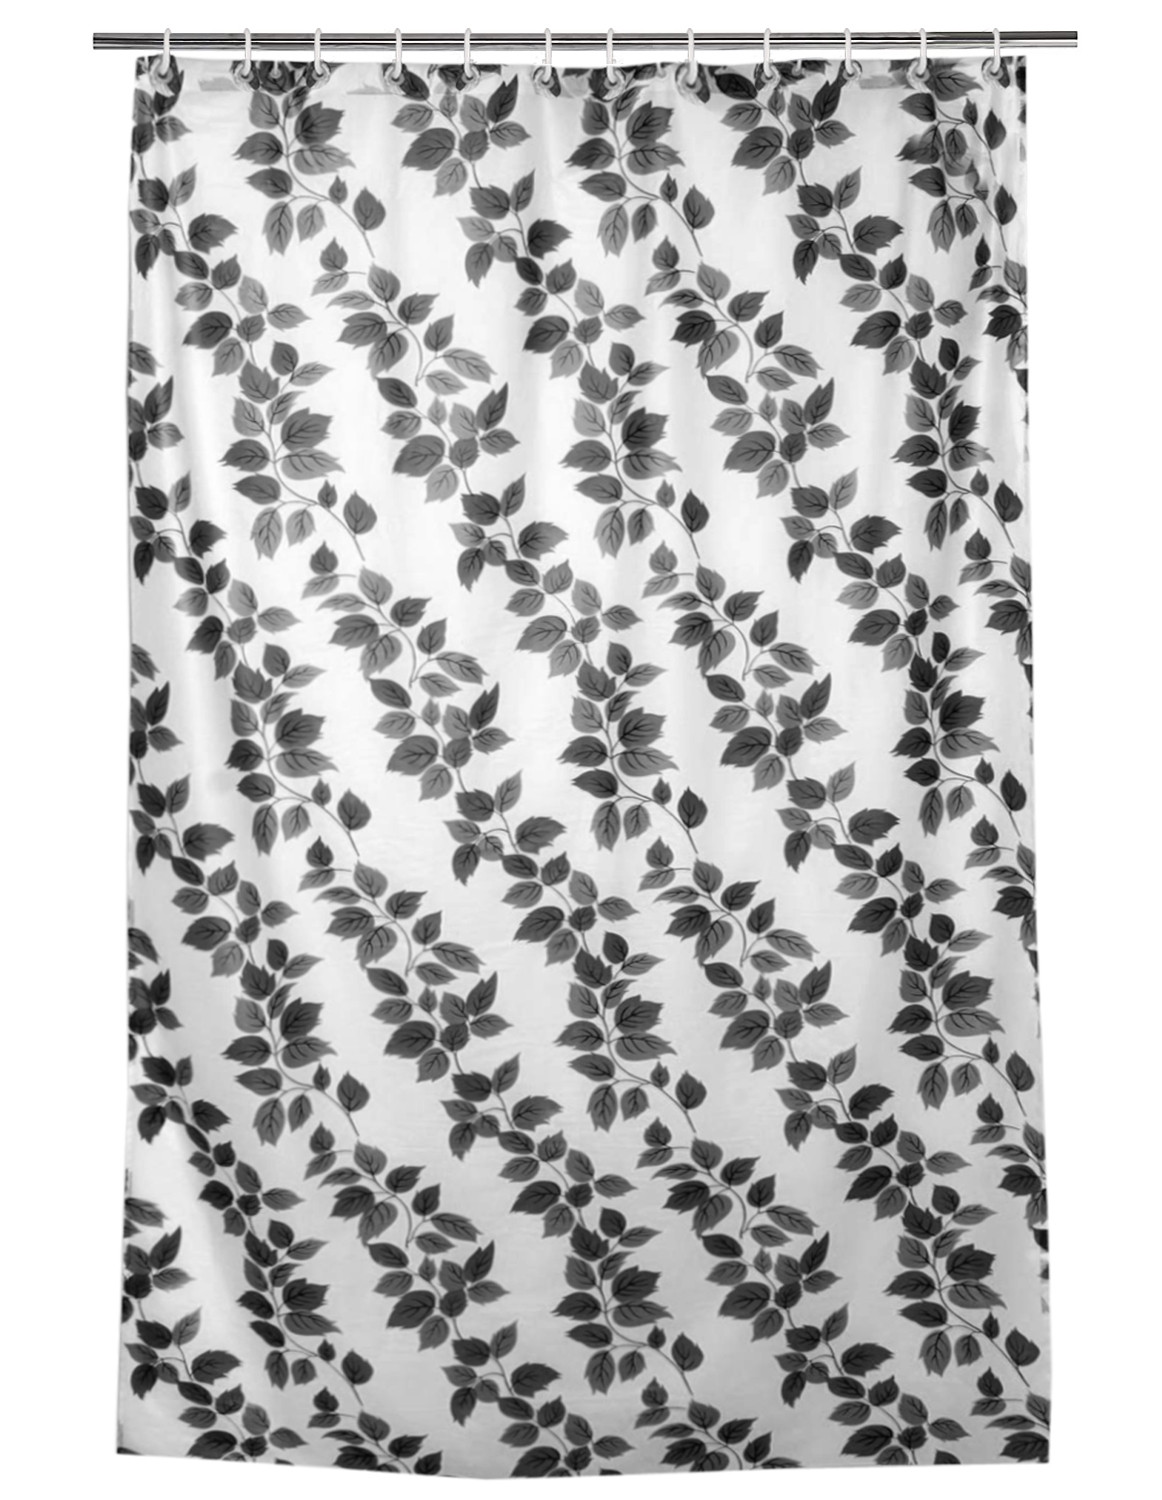 Kuber Industries 0.20mm Leaf Printed Stain Resistant, No Odor, Waterproof PVC AC Curtain With Hooks,7 Feet (Grey)